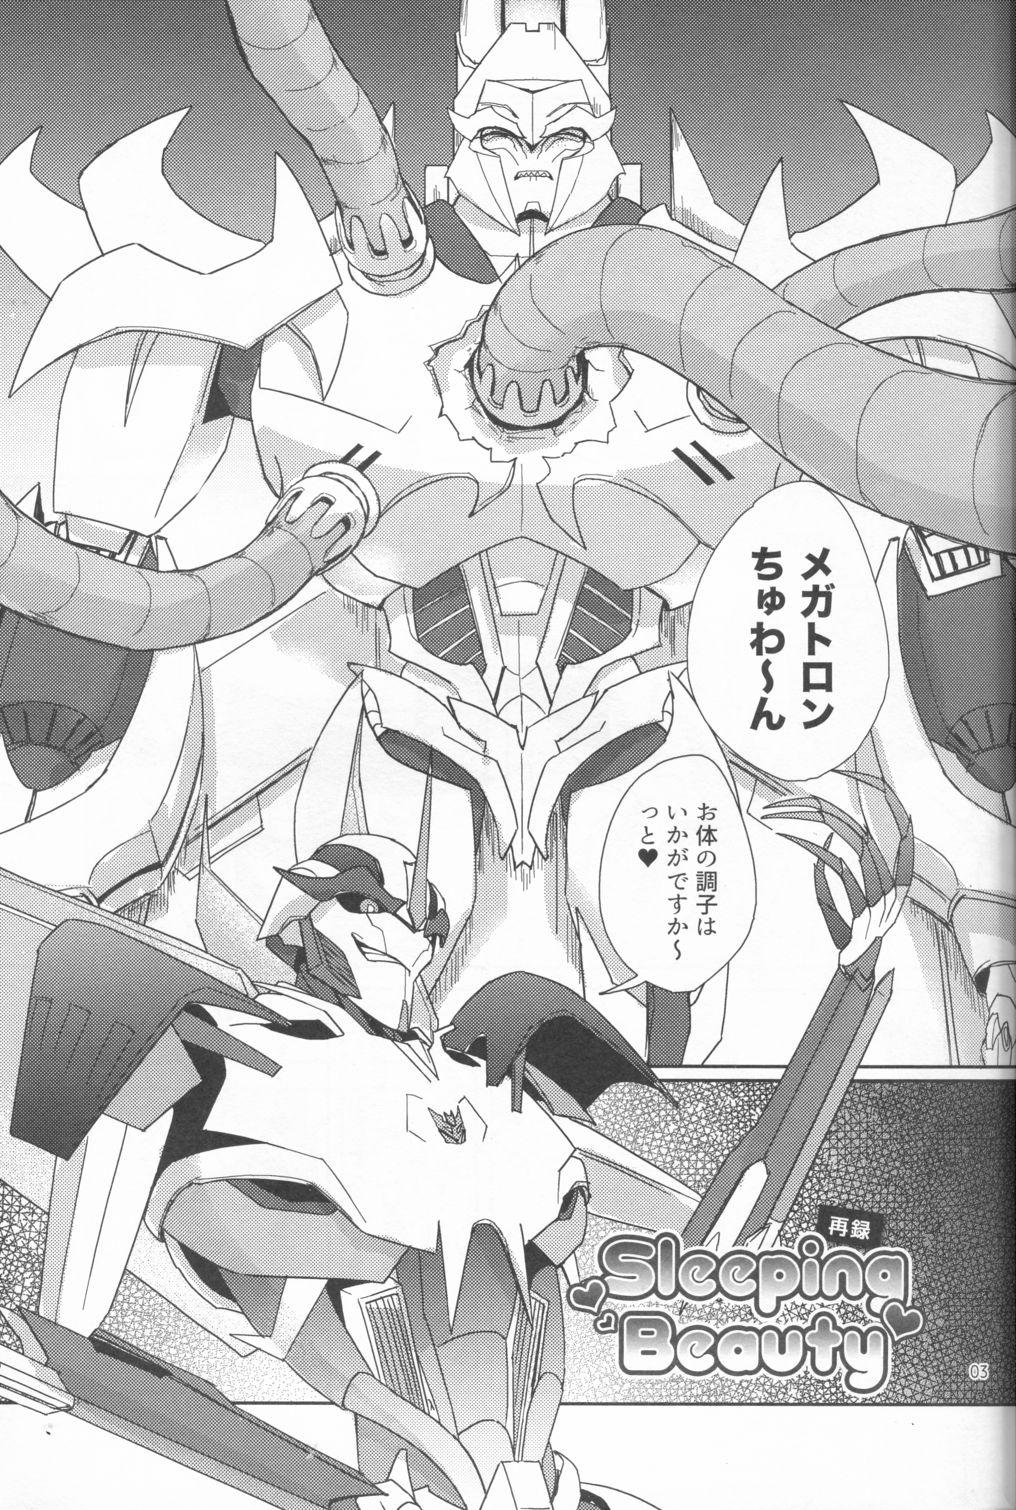 Cachonda Sleeping Danger - Transformers Duro - Page 2